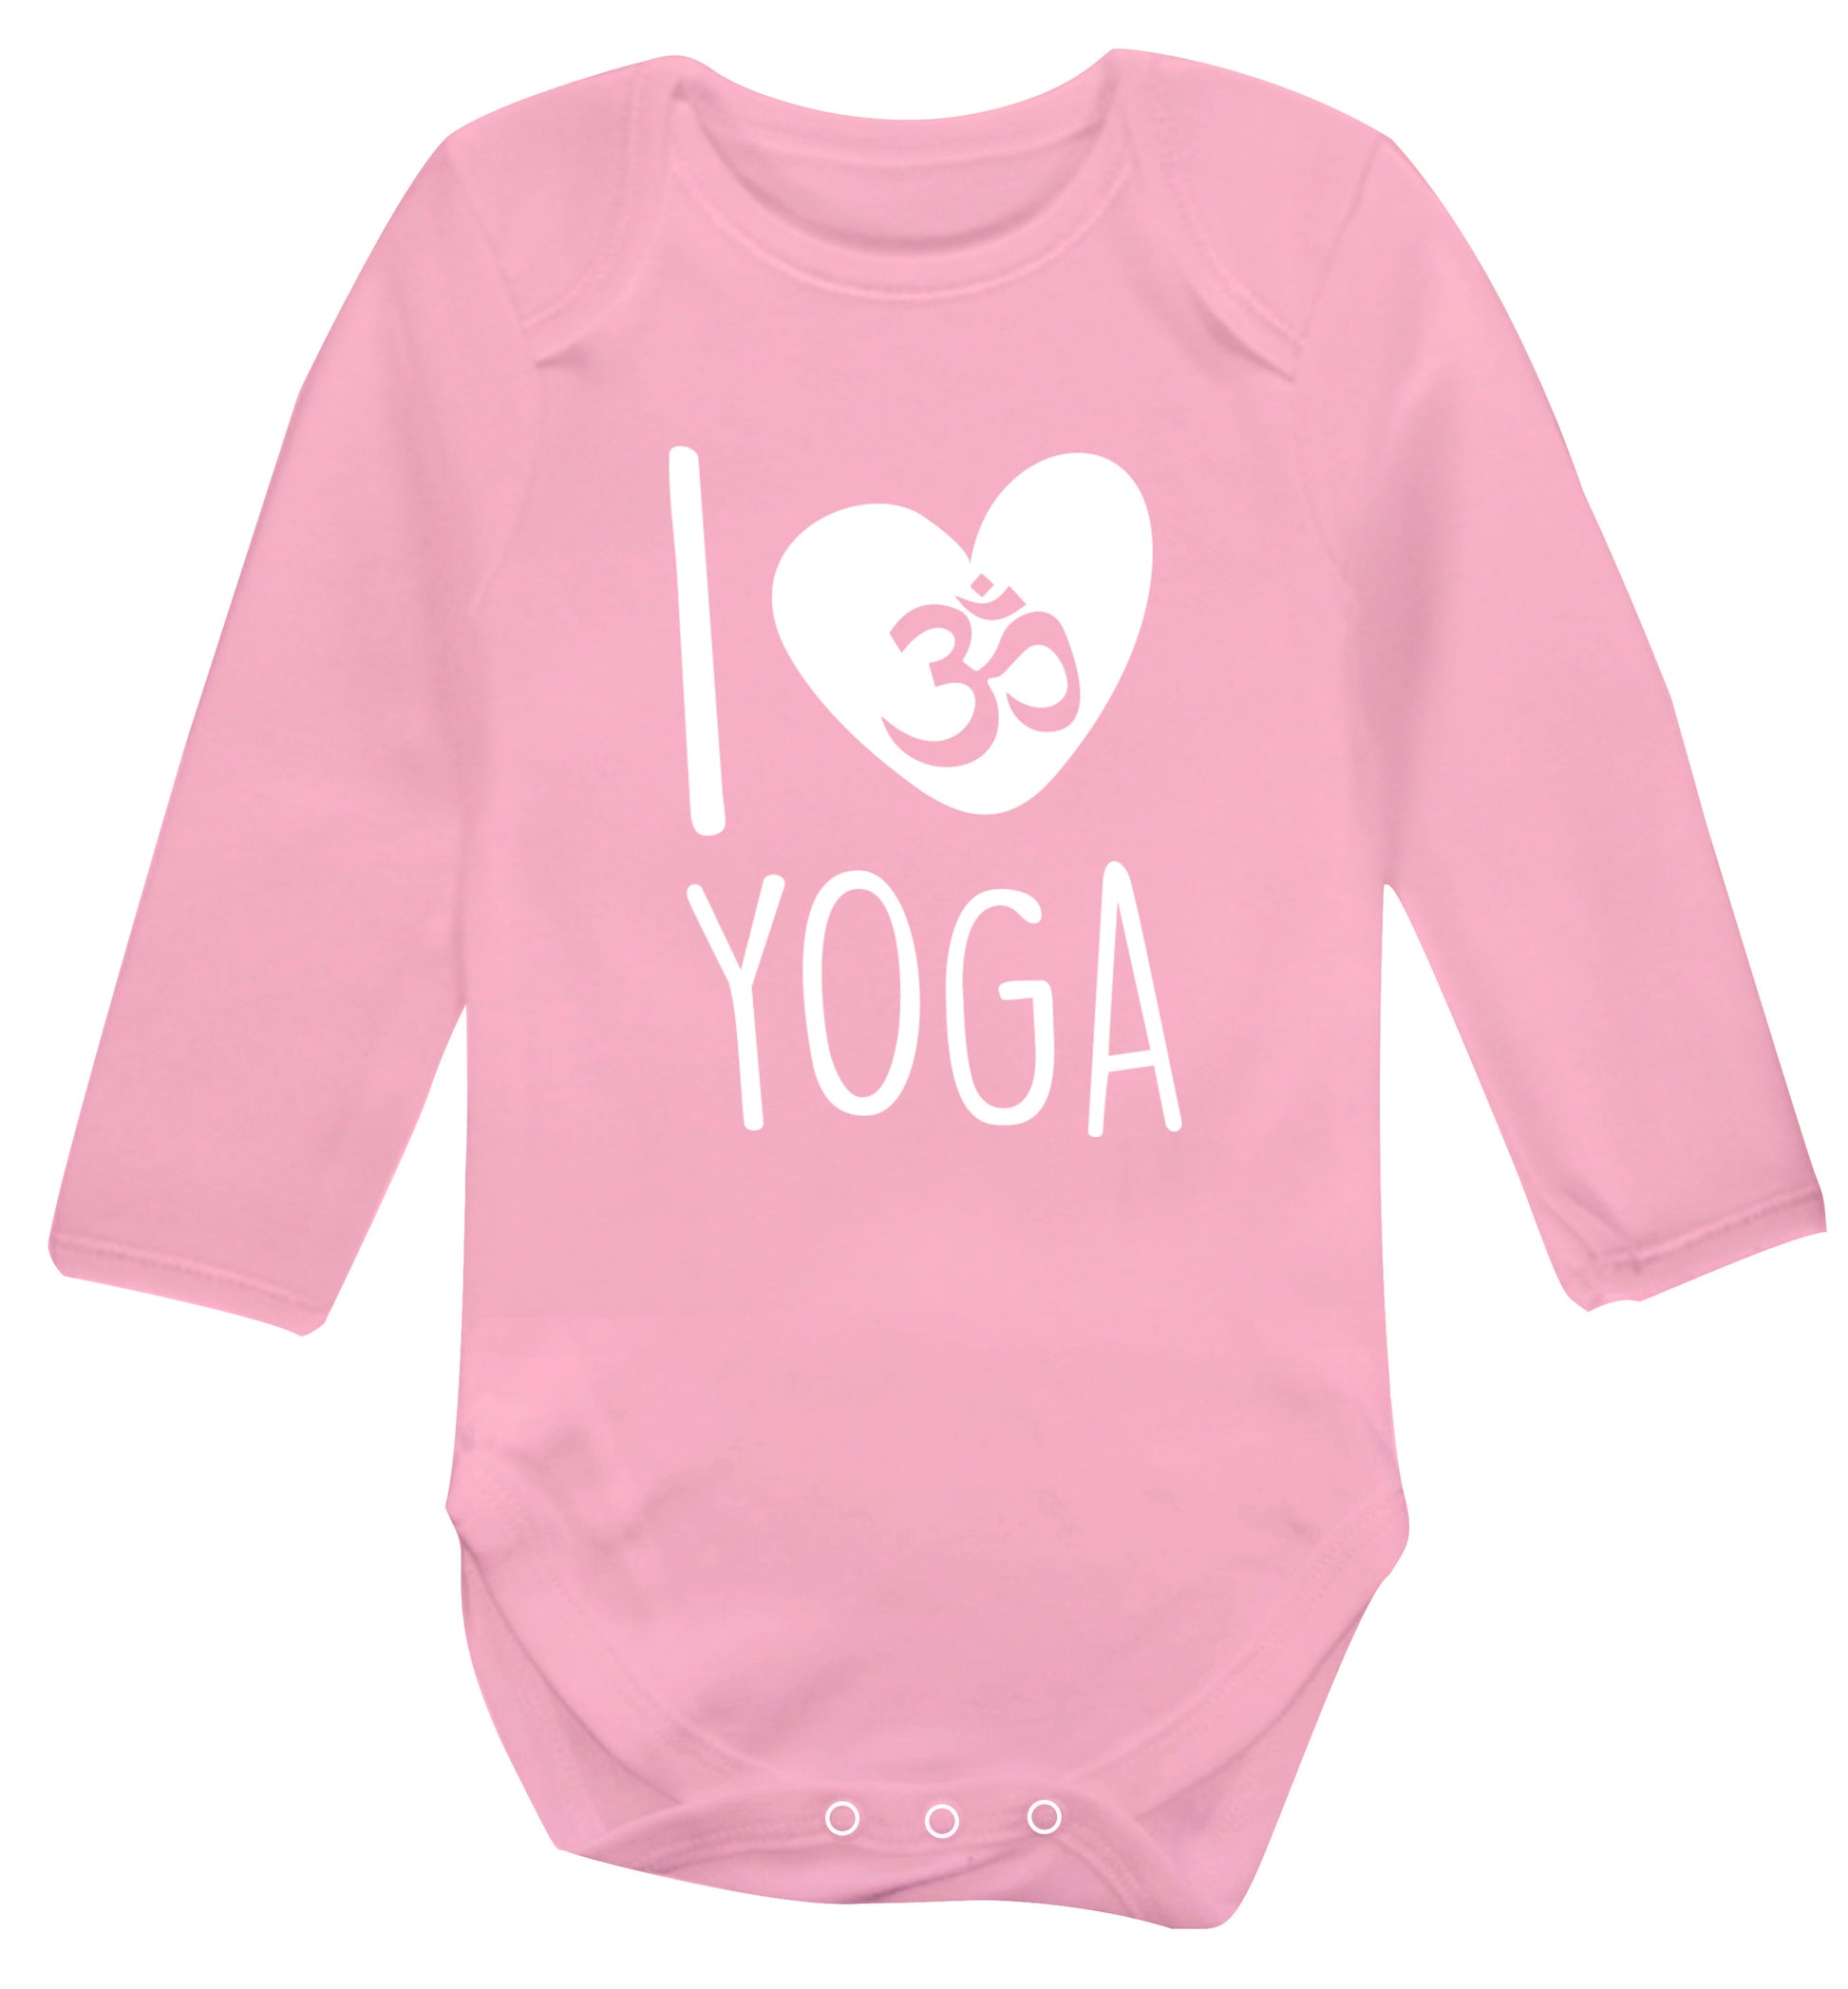 I love yoga Baby Vest long sleeved pale pink 6-12 months